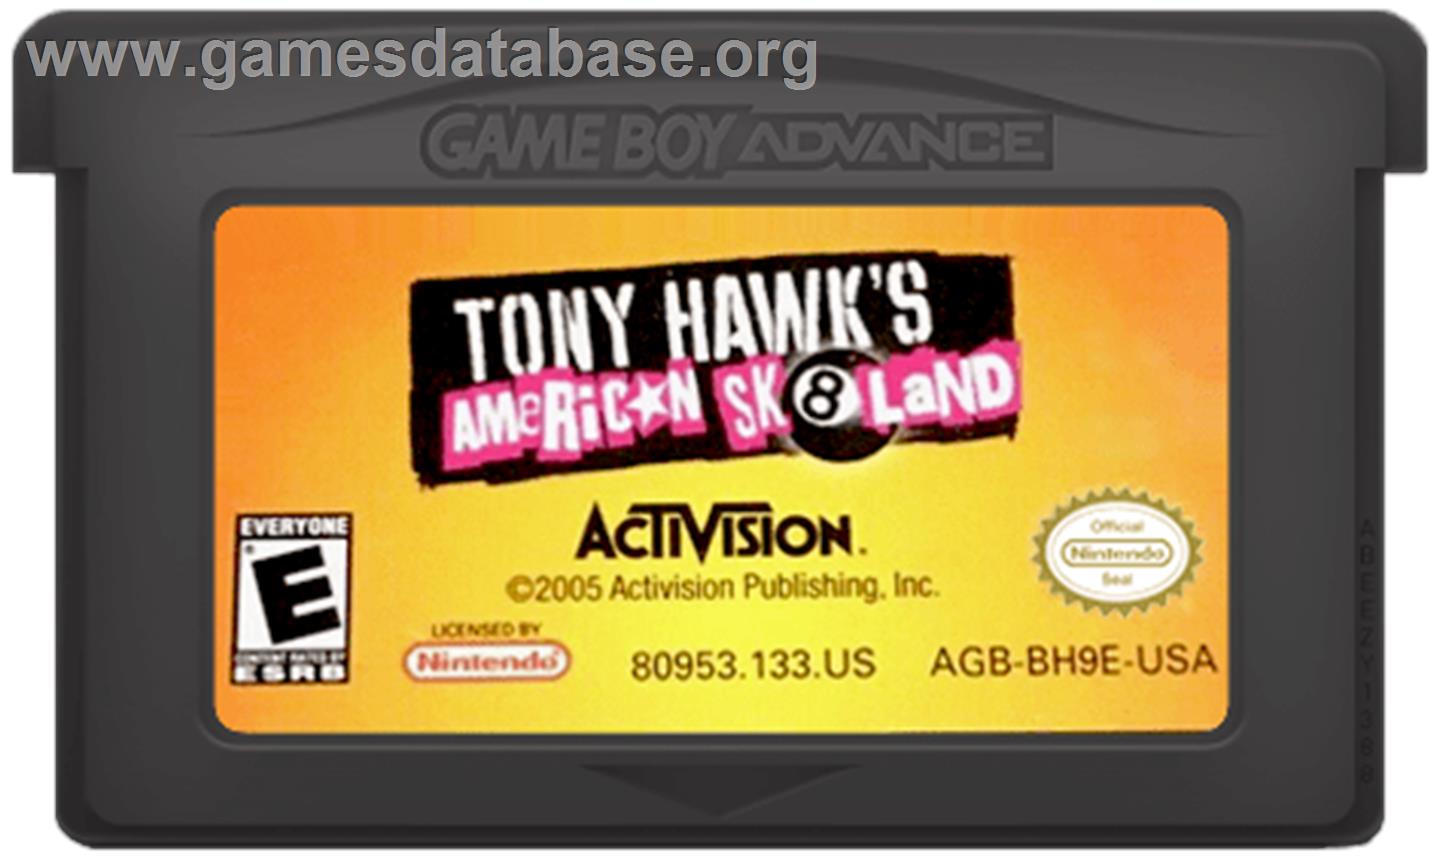 Tony Hawk's American Sk8land - Nintendo Game Boy Advance - Artwork - Cartridge